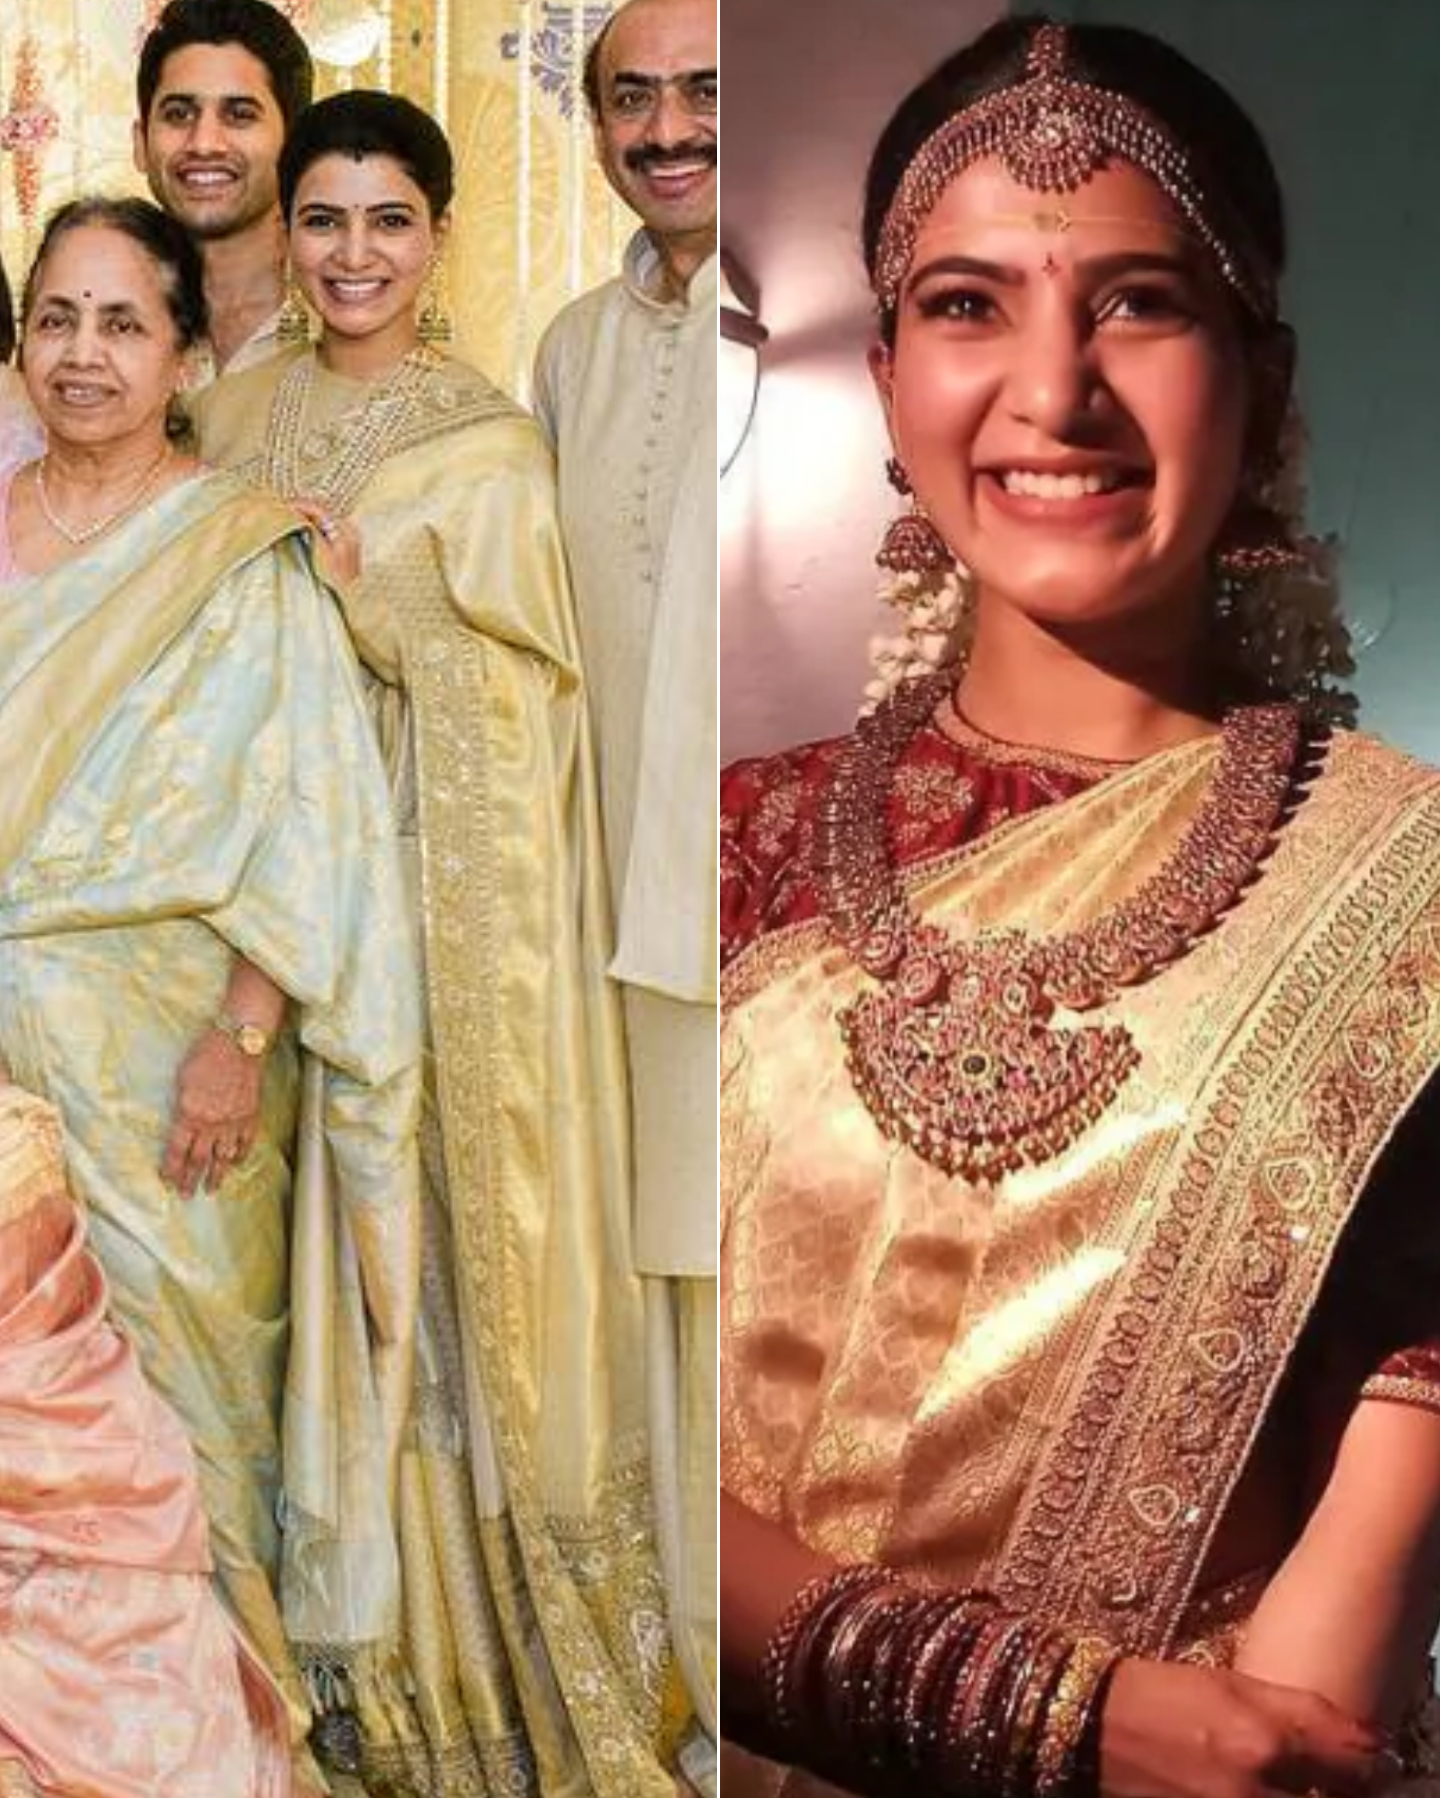 Samantha Ruth Prabhu repeats her wedding saree at another wedding event